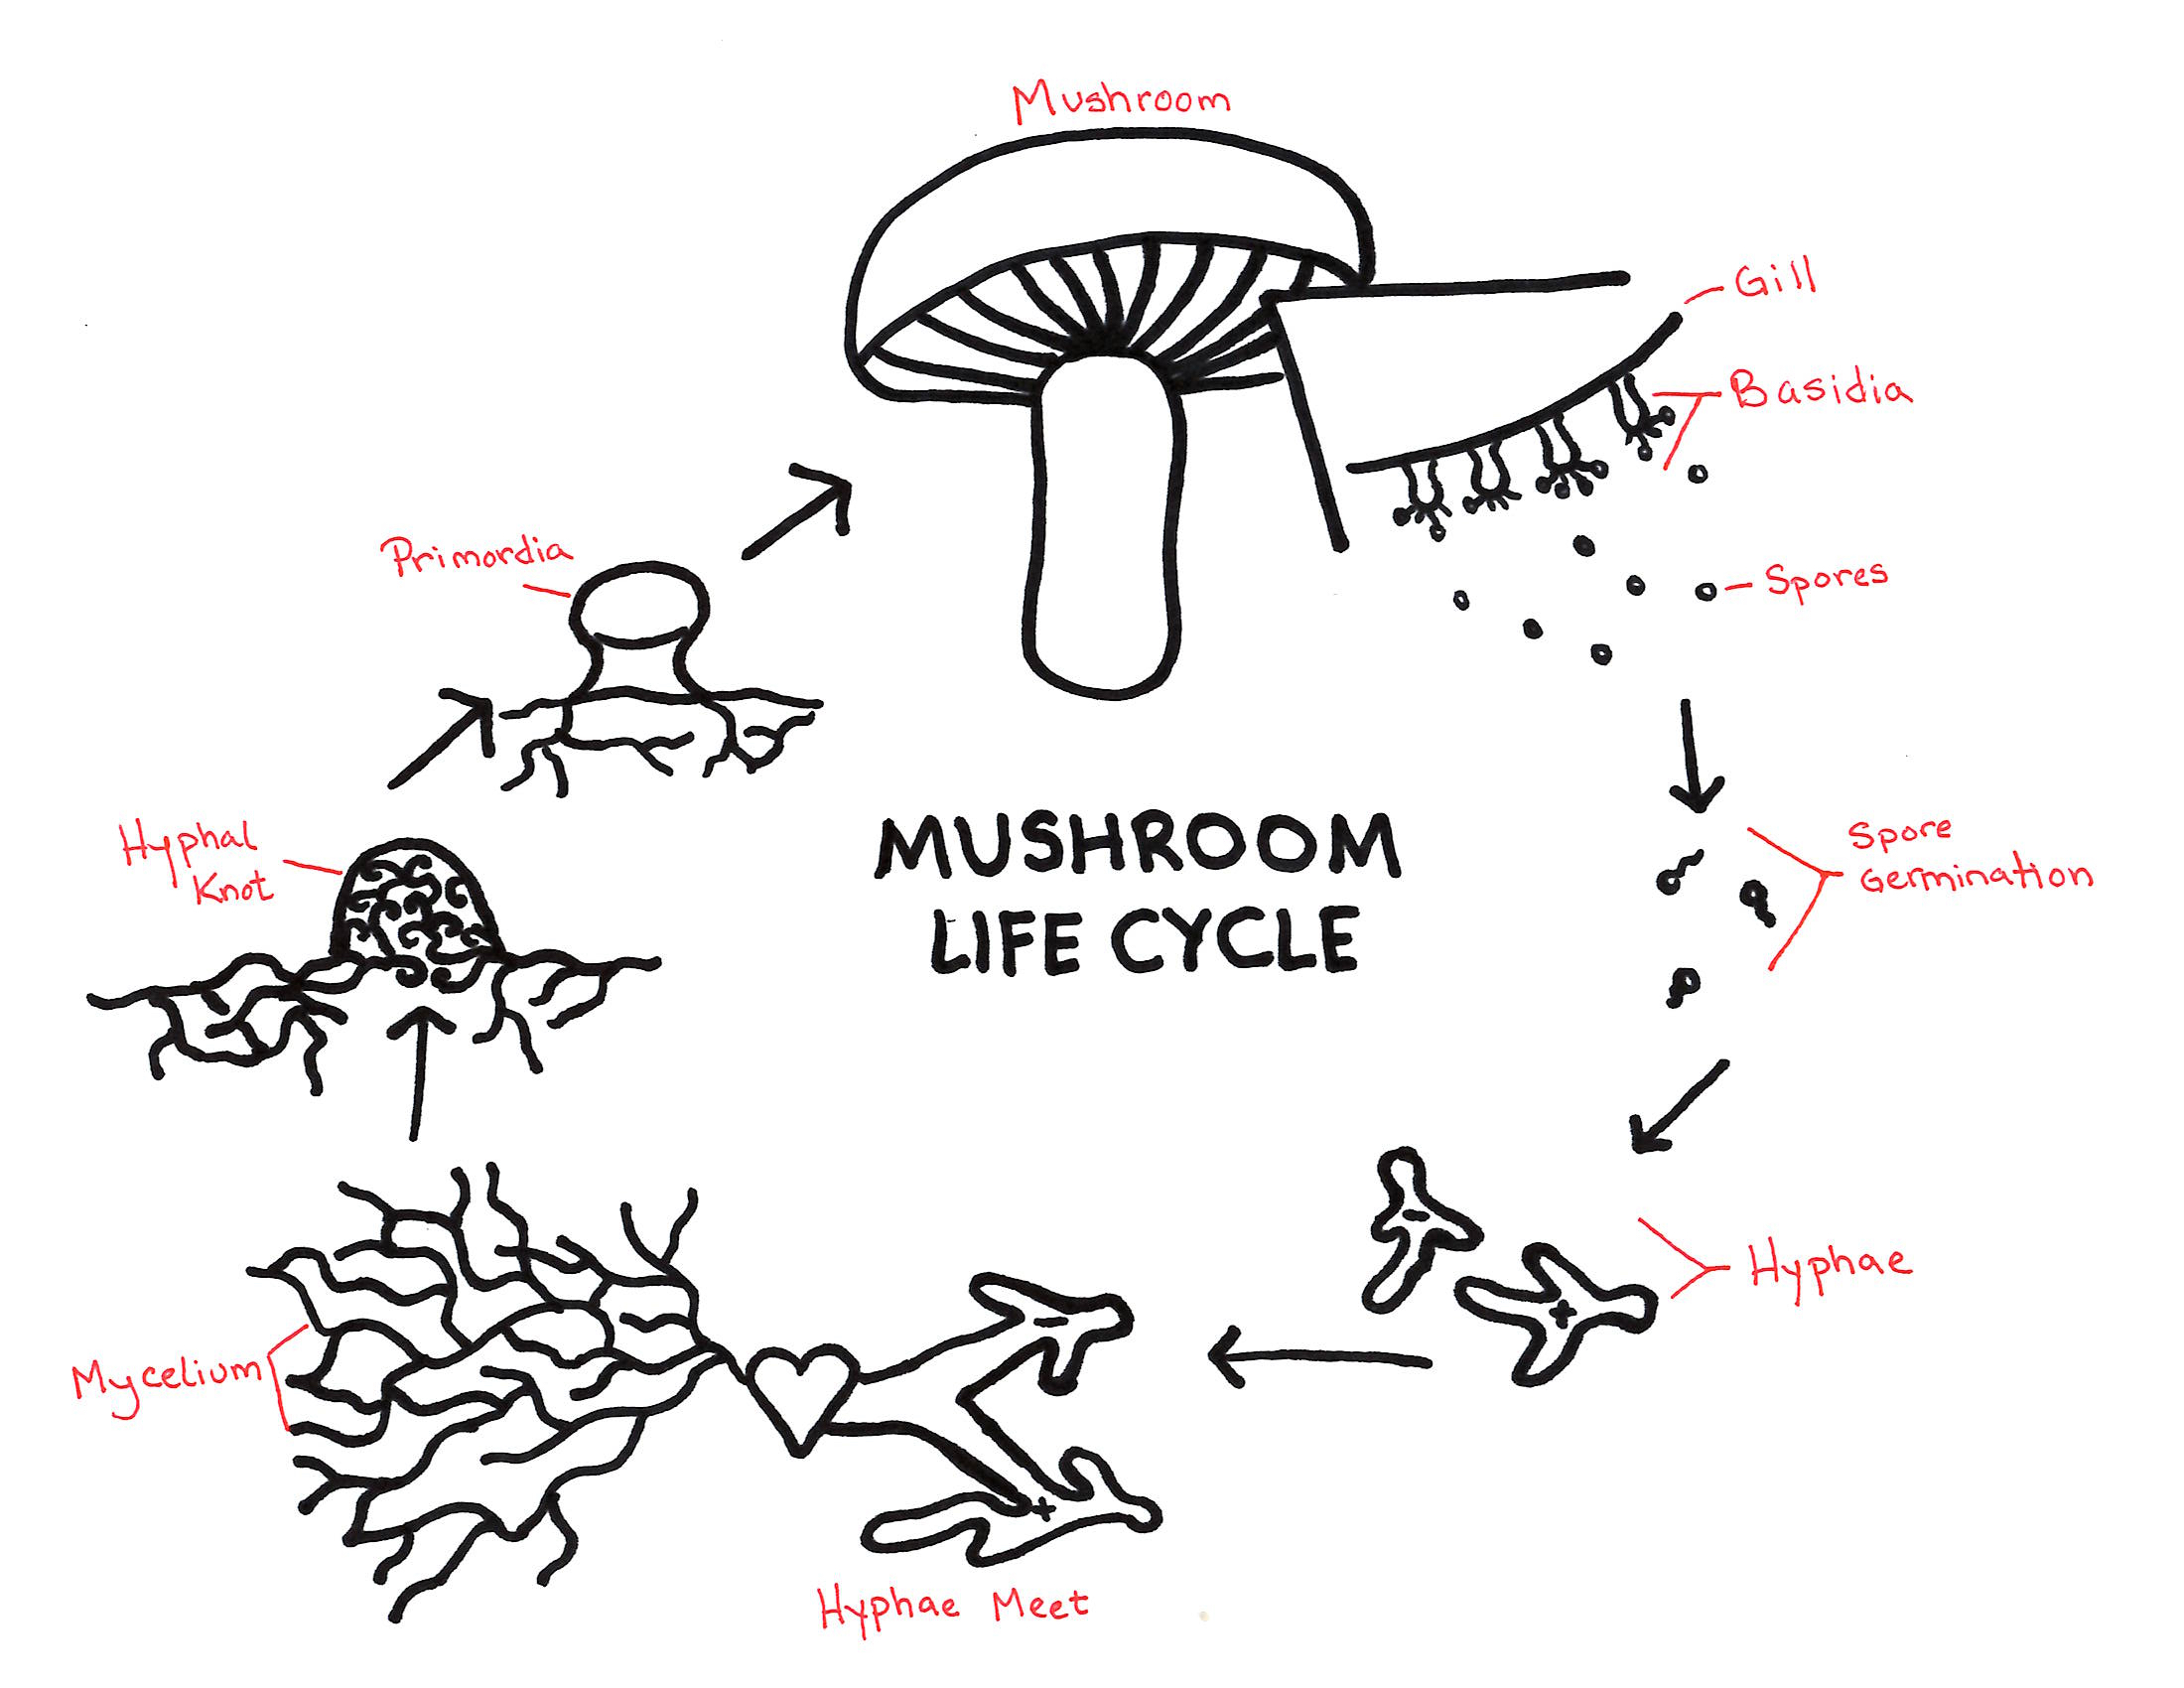 Mushroom life cycle